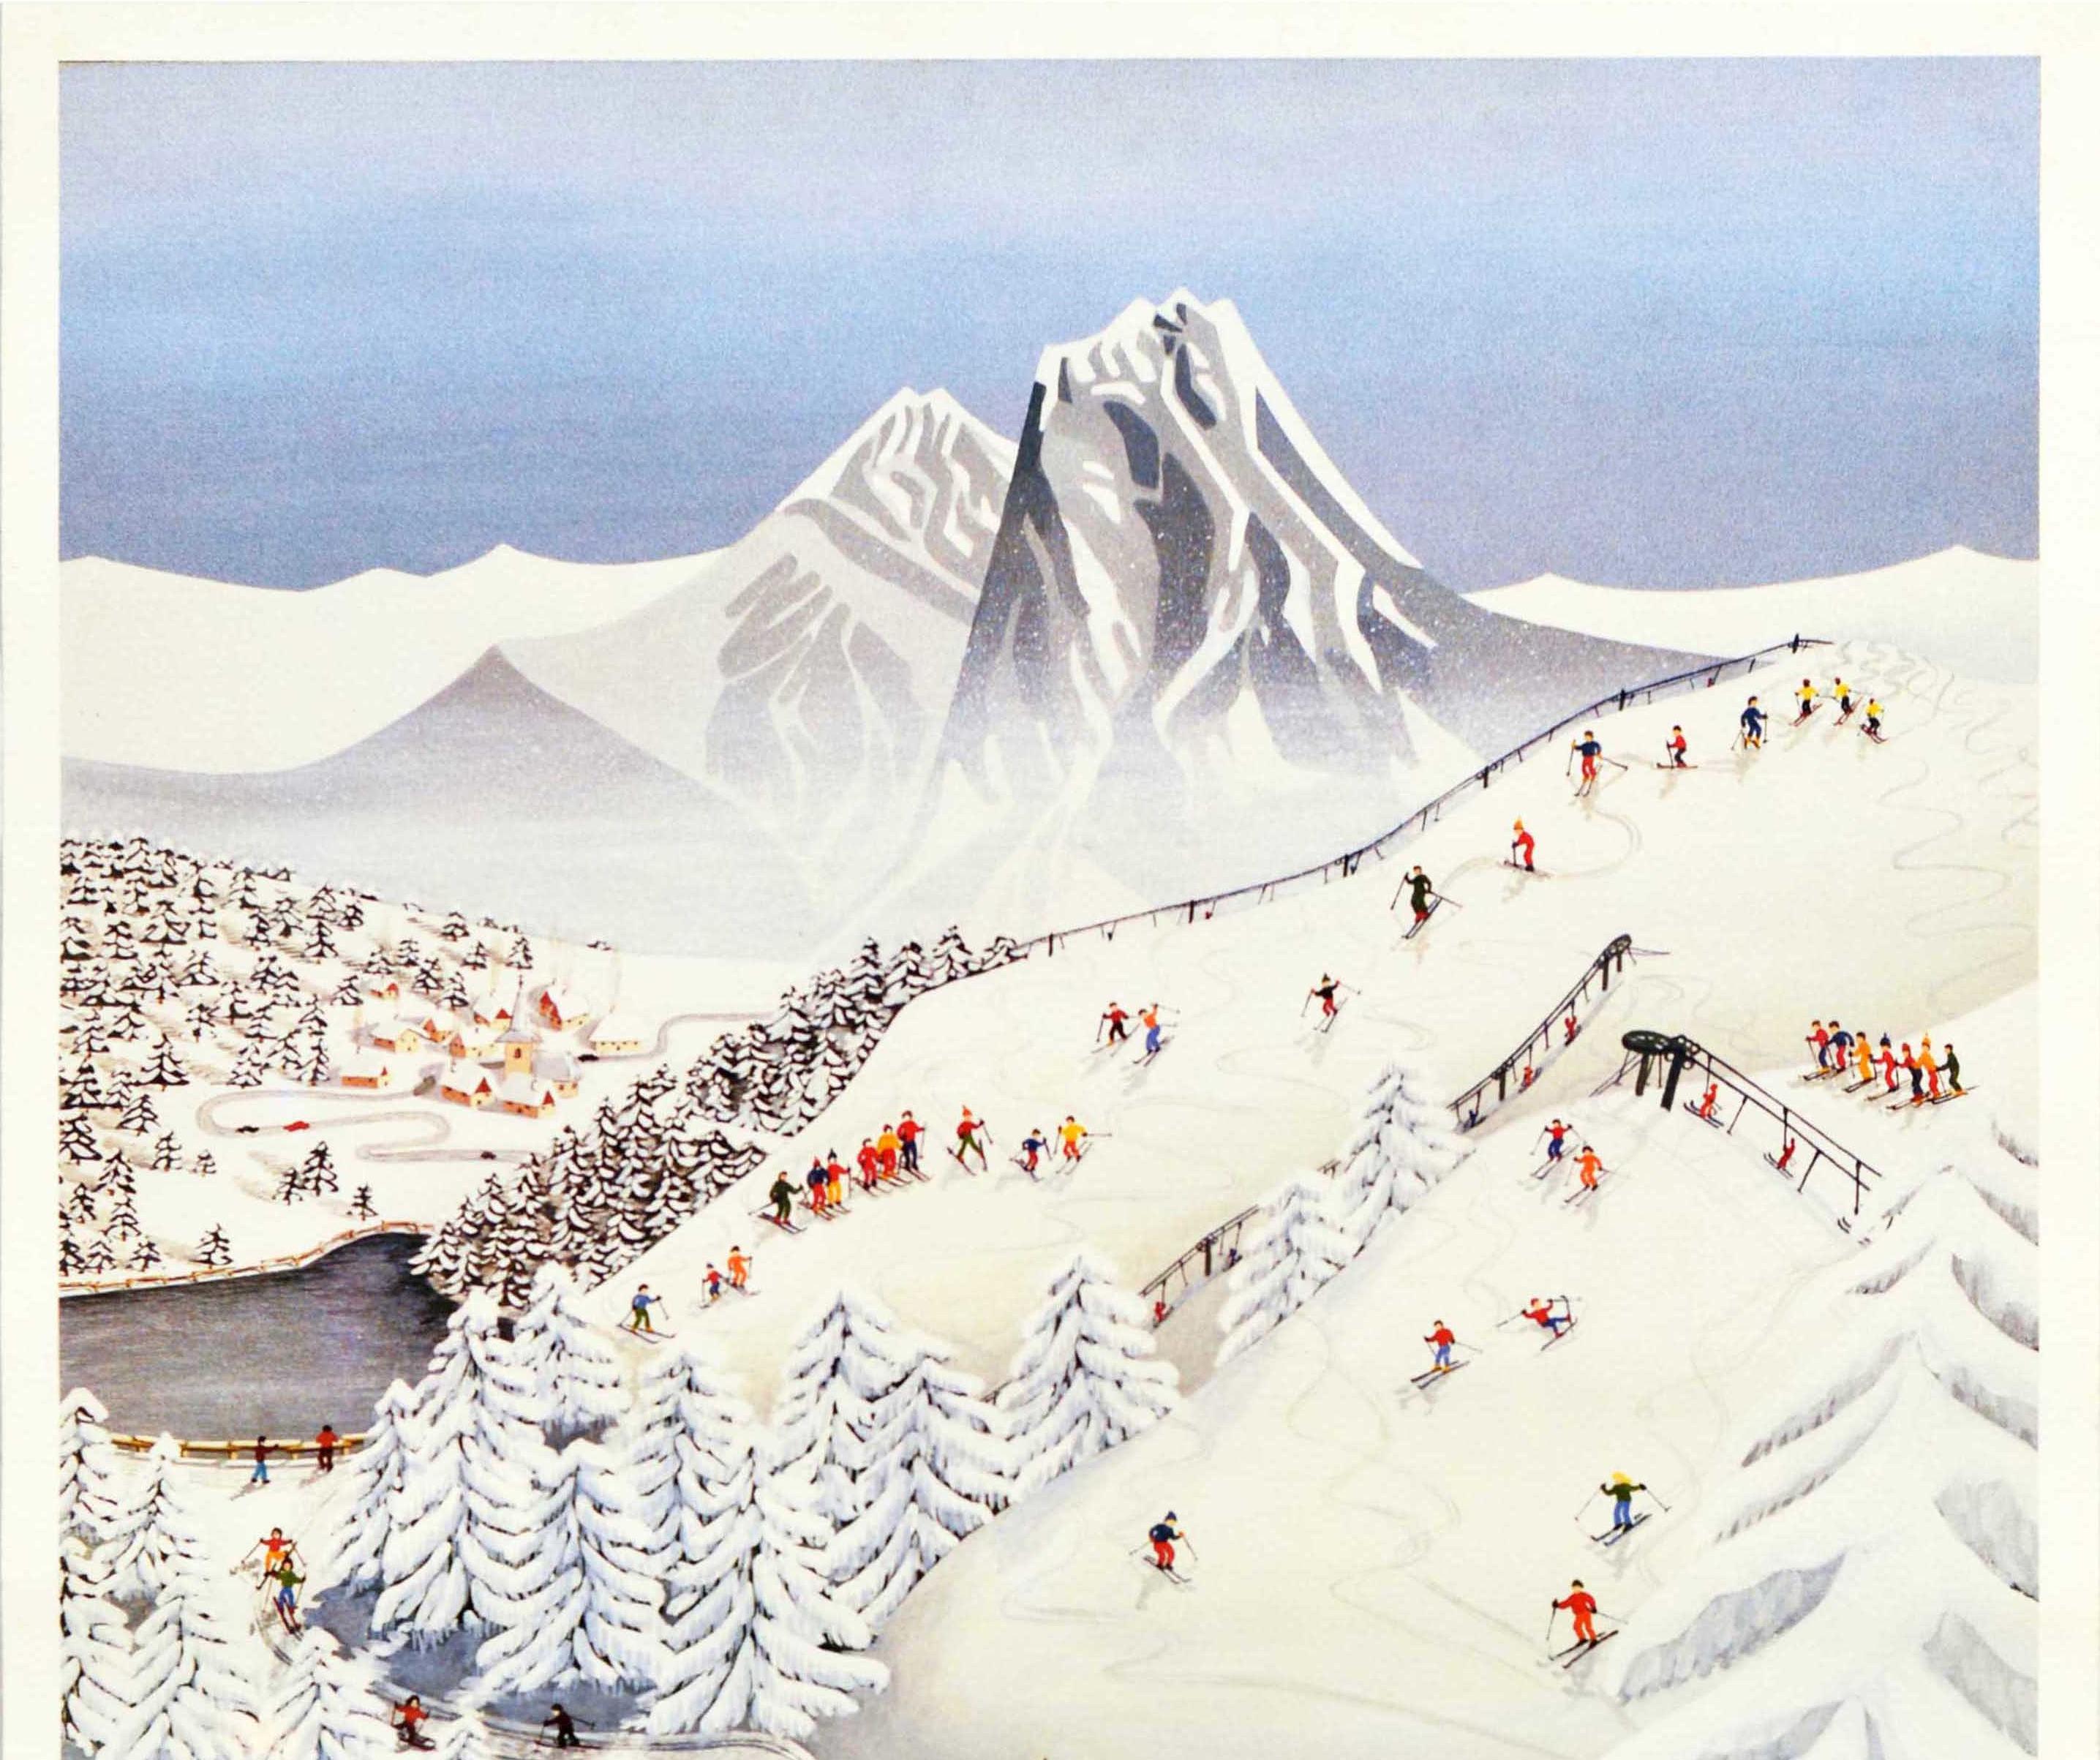 French Original Vintage Winter Sport Travel Poster En Savoie Les Karellis Ski Resort